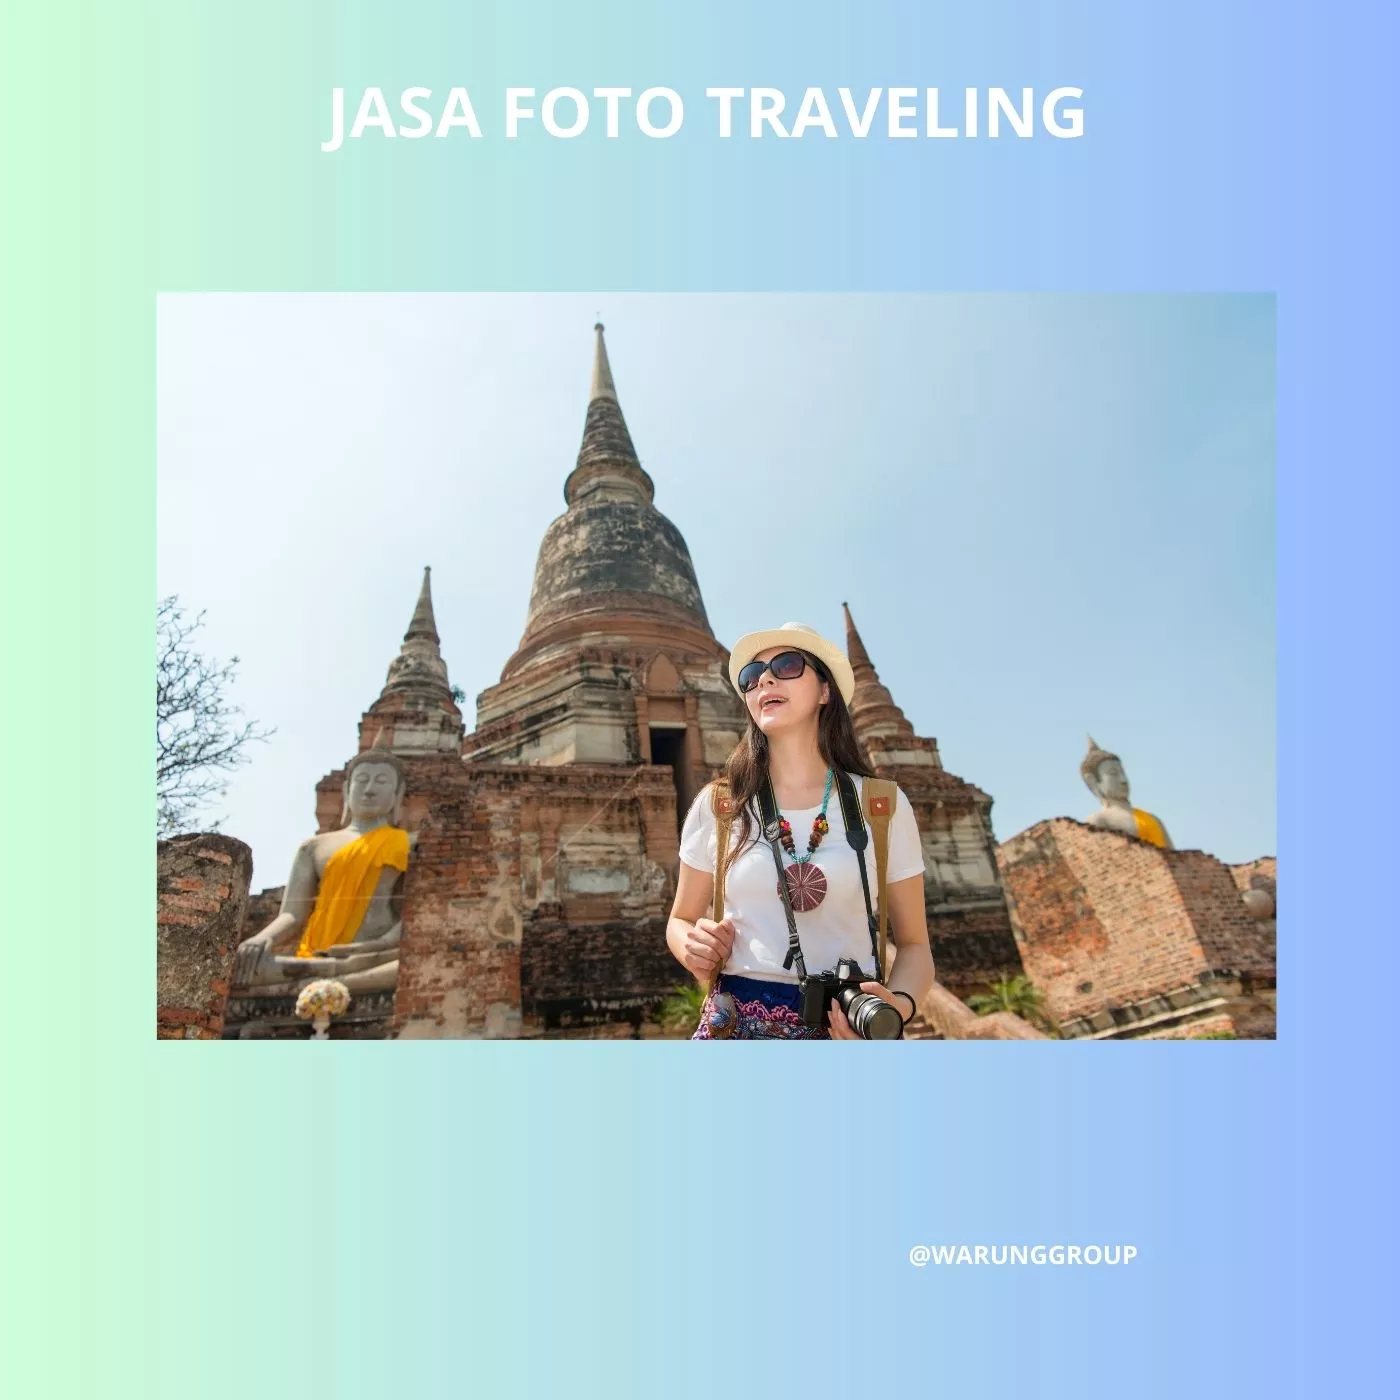 Jasa Foto Travelling